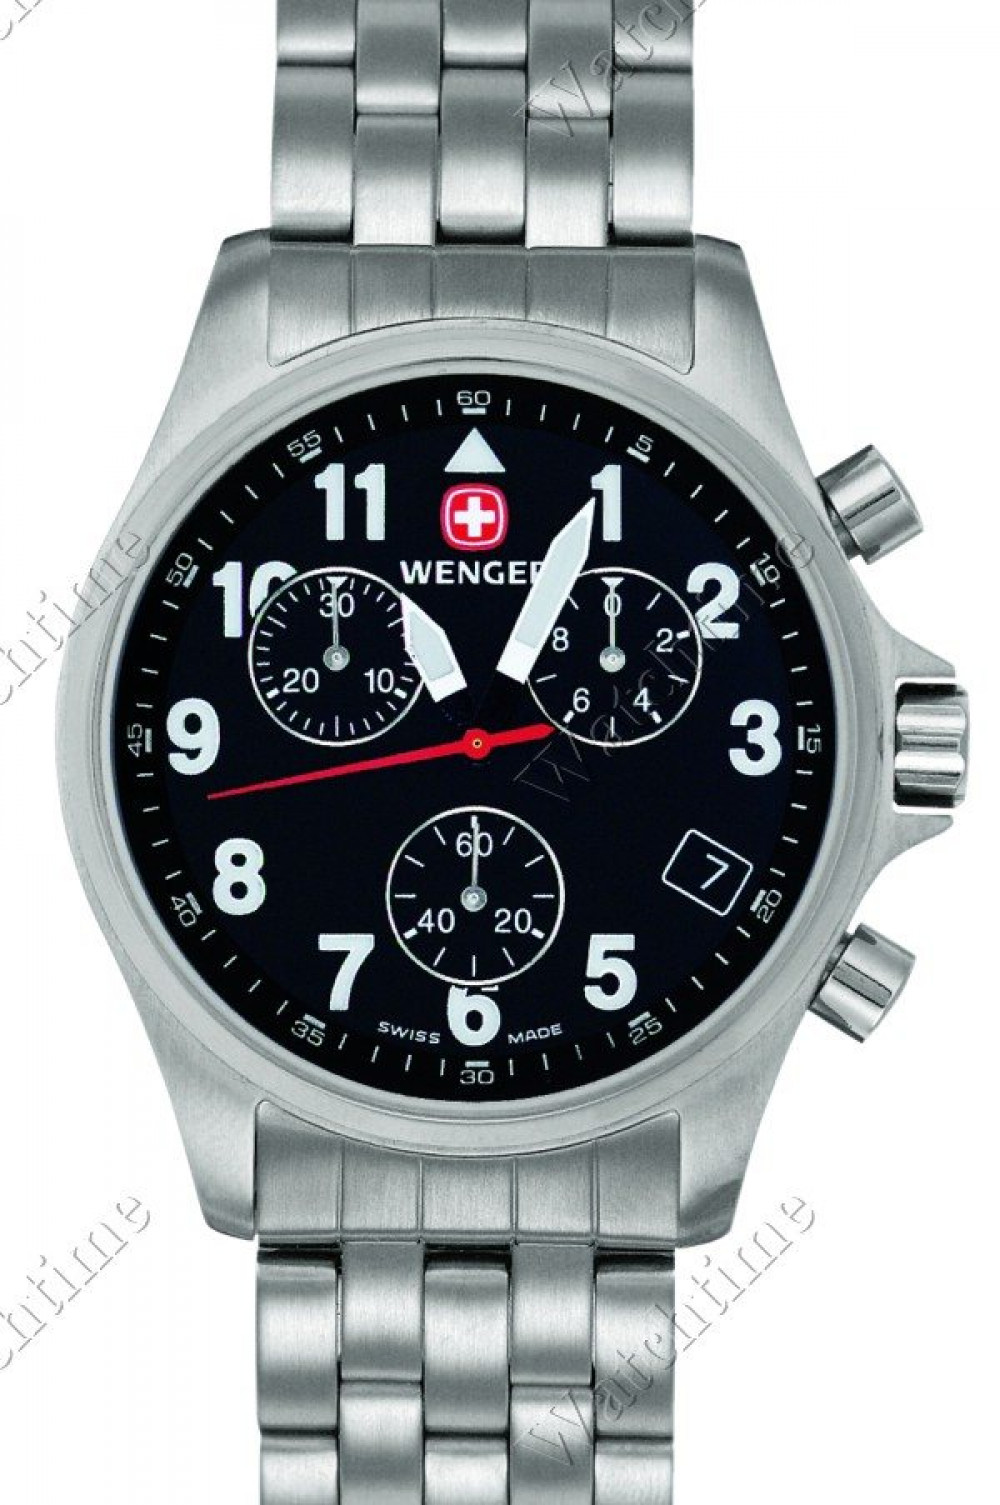 Zegarek firmy Wenger, model Airforce Chrono